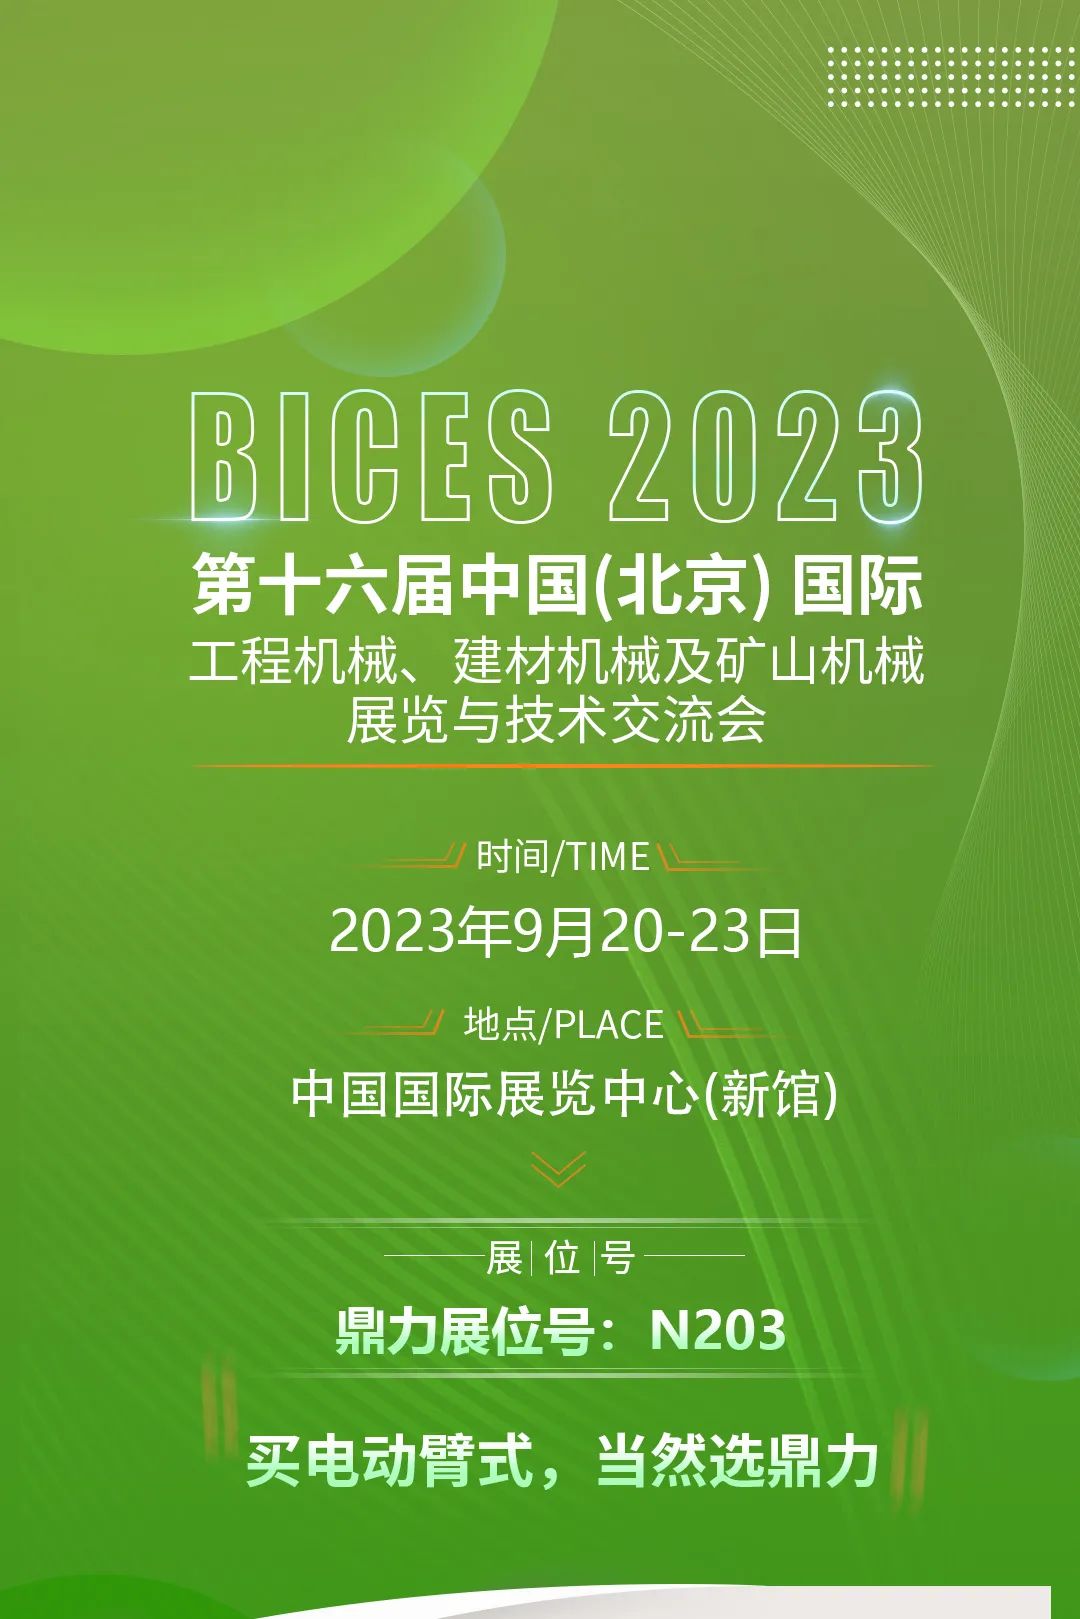 BICES 2023，鼎力“绿色天团”抢先看！